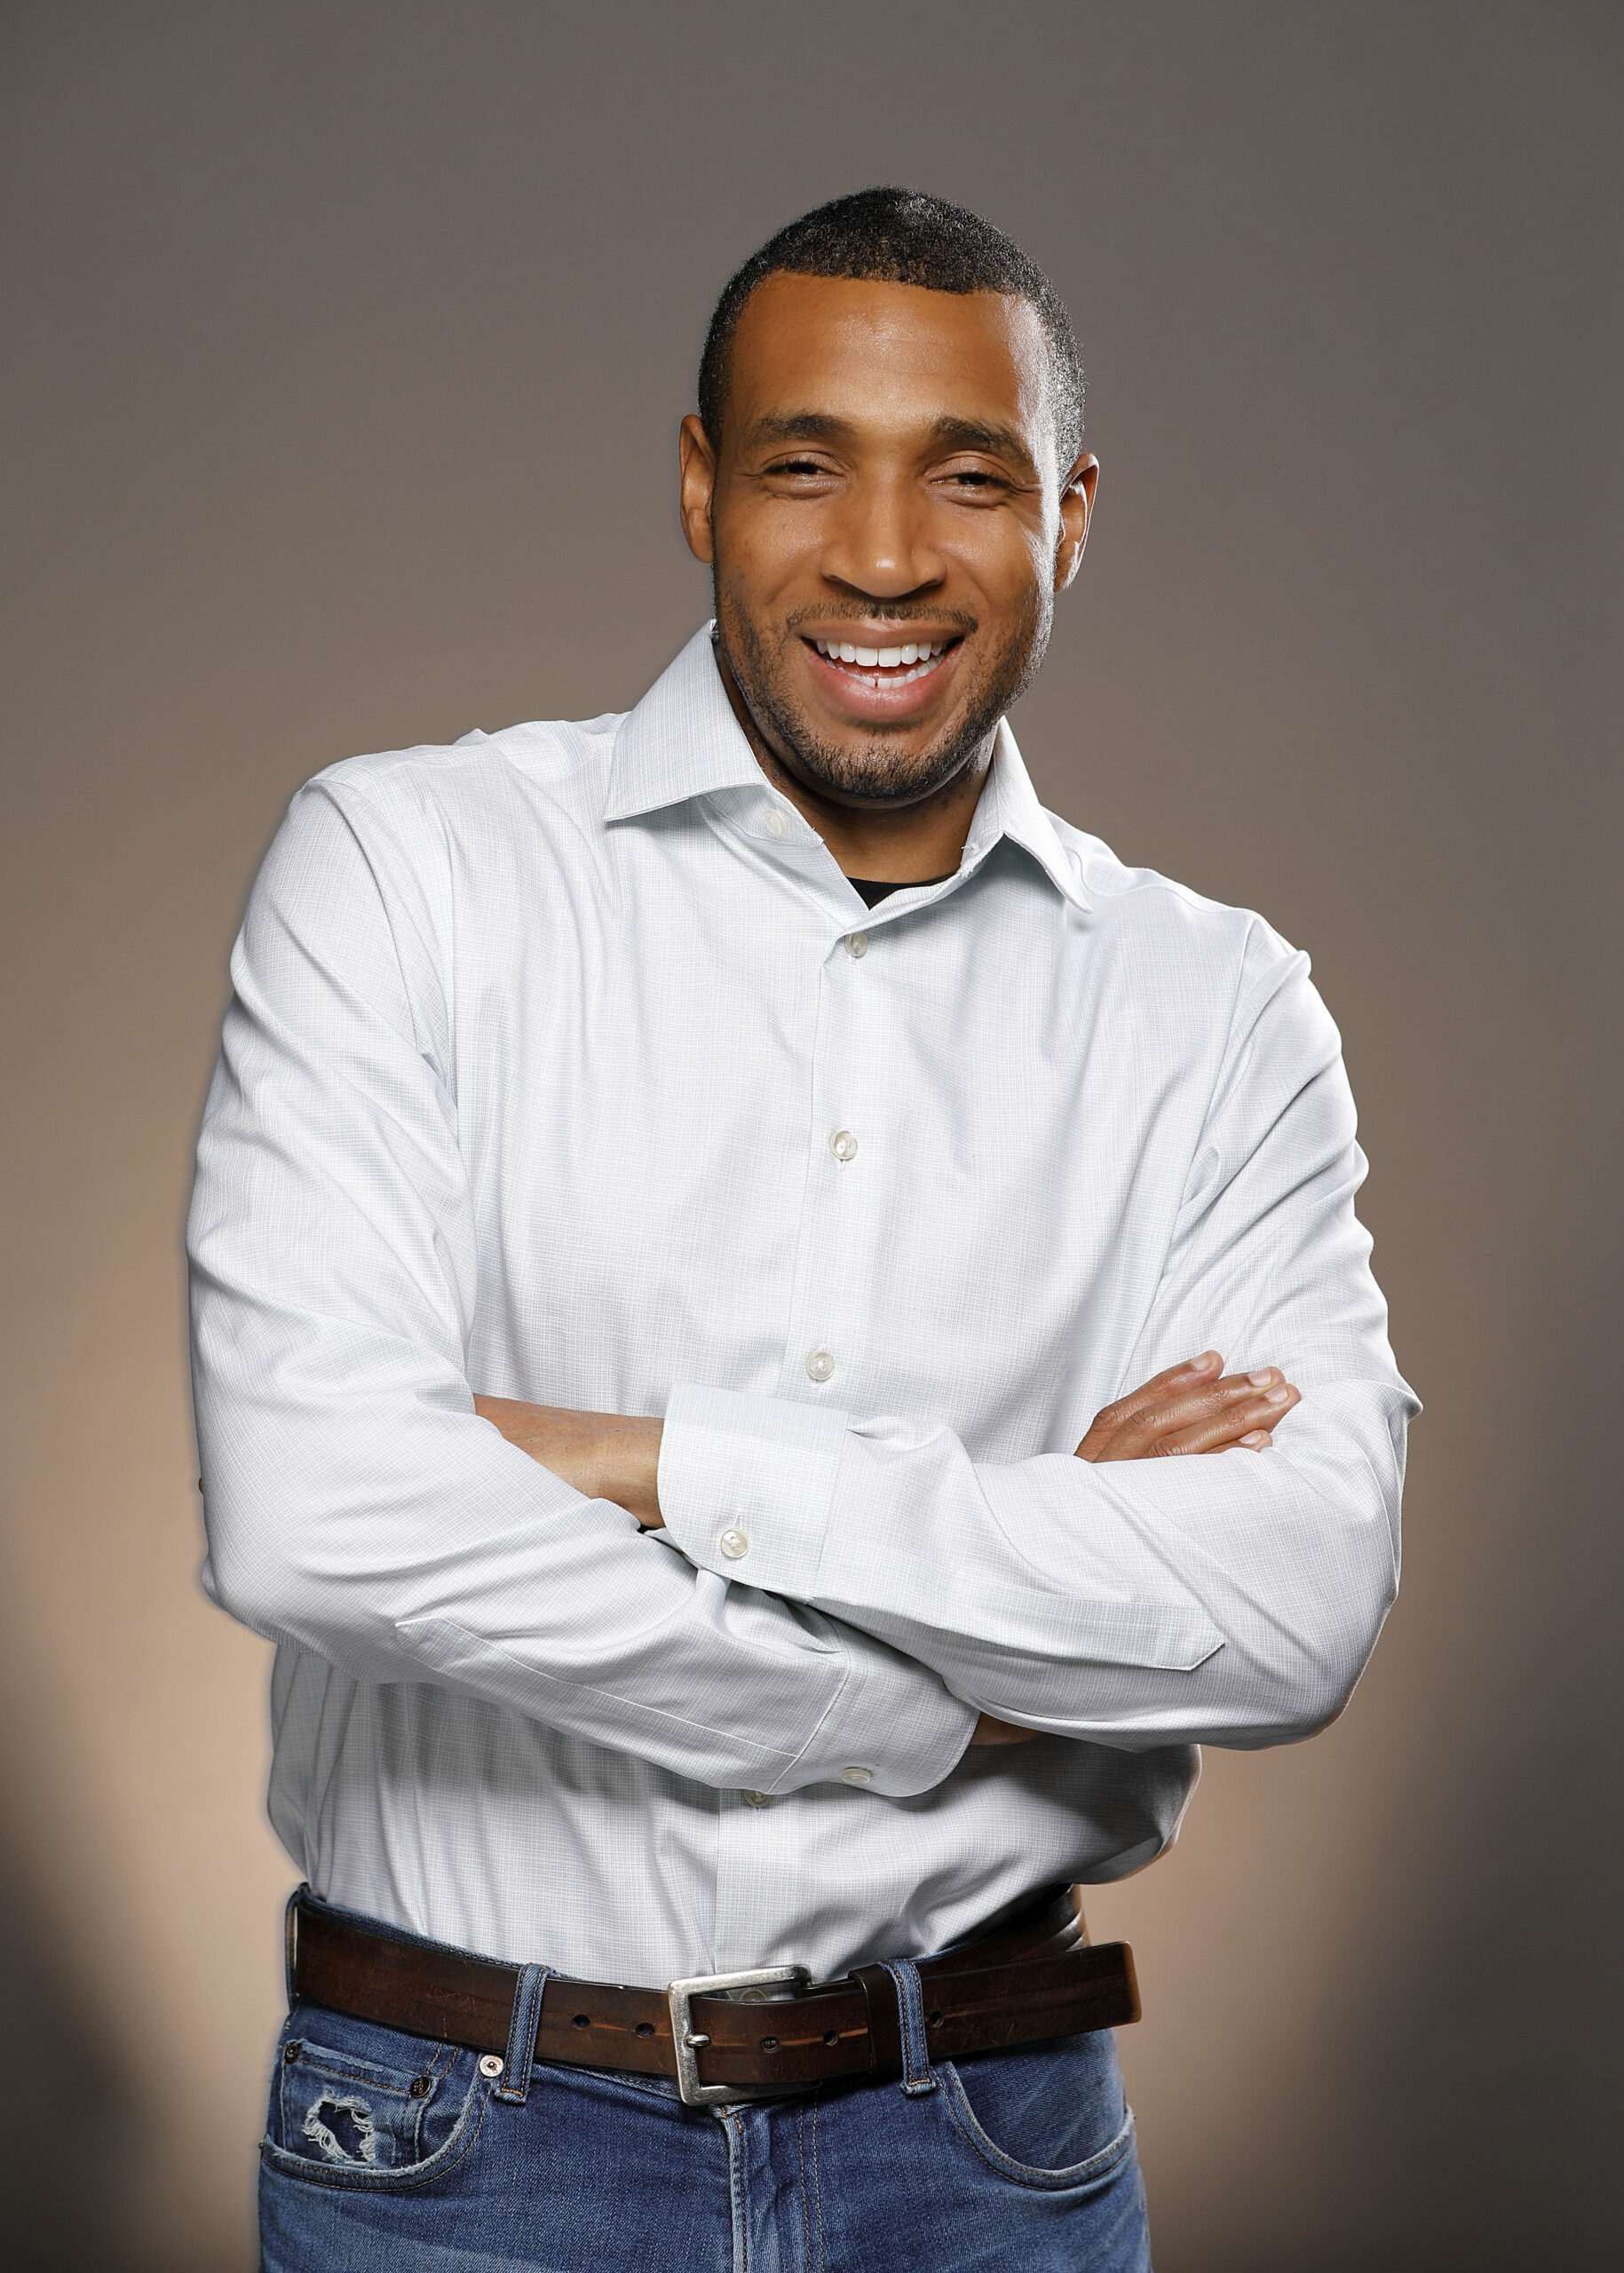 Smiling Black Man posing for Business Headshot